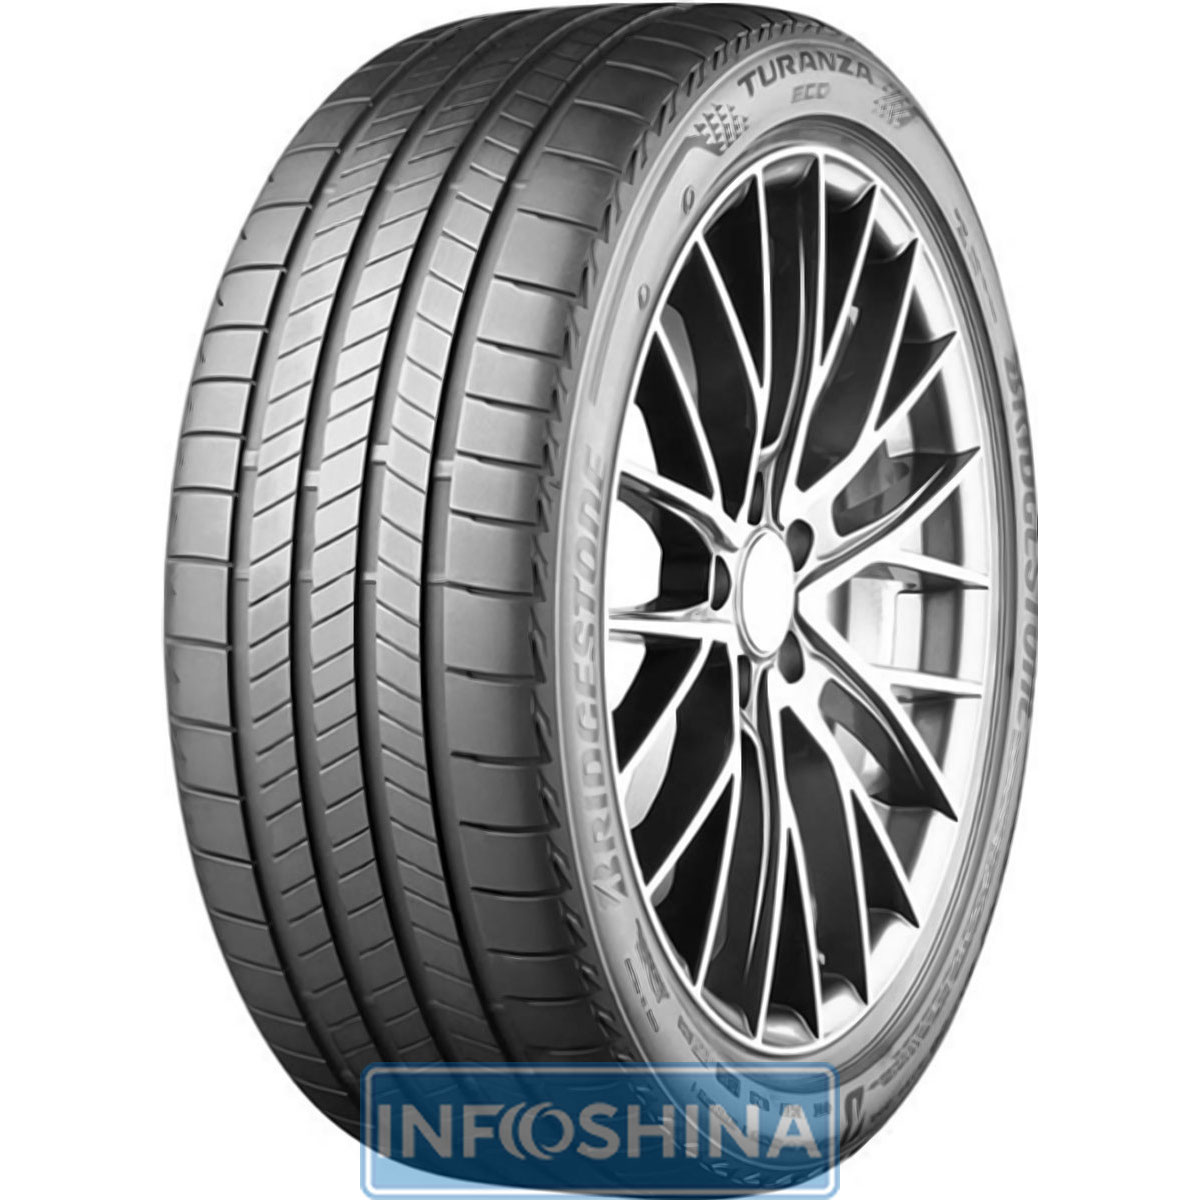 Купить шины Bridgestone Turanza Eco 185/55 R15 86T